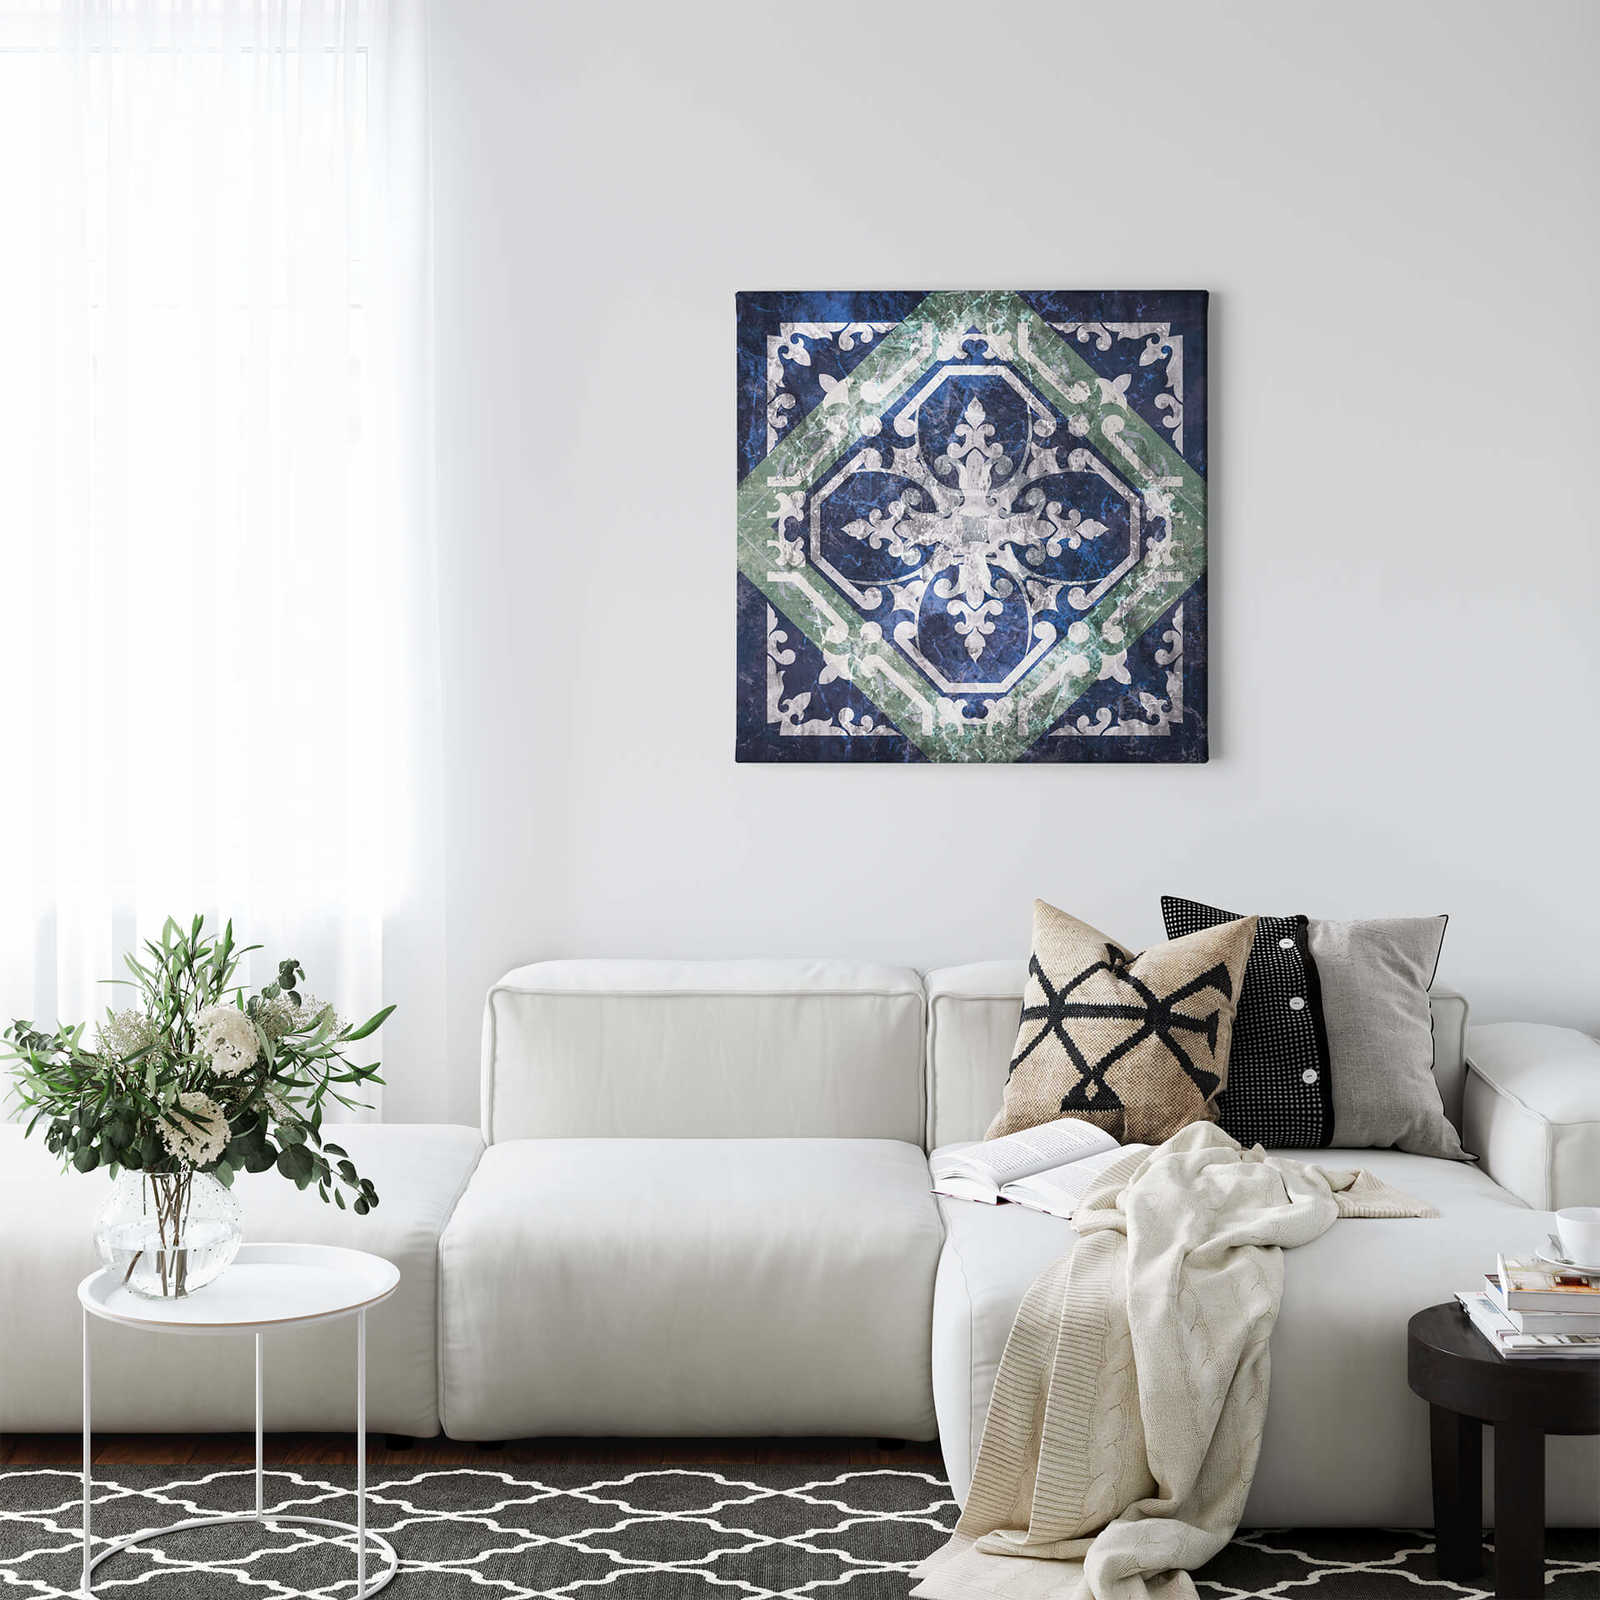             Square canvas print with Marrakesh tile design
        